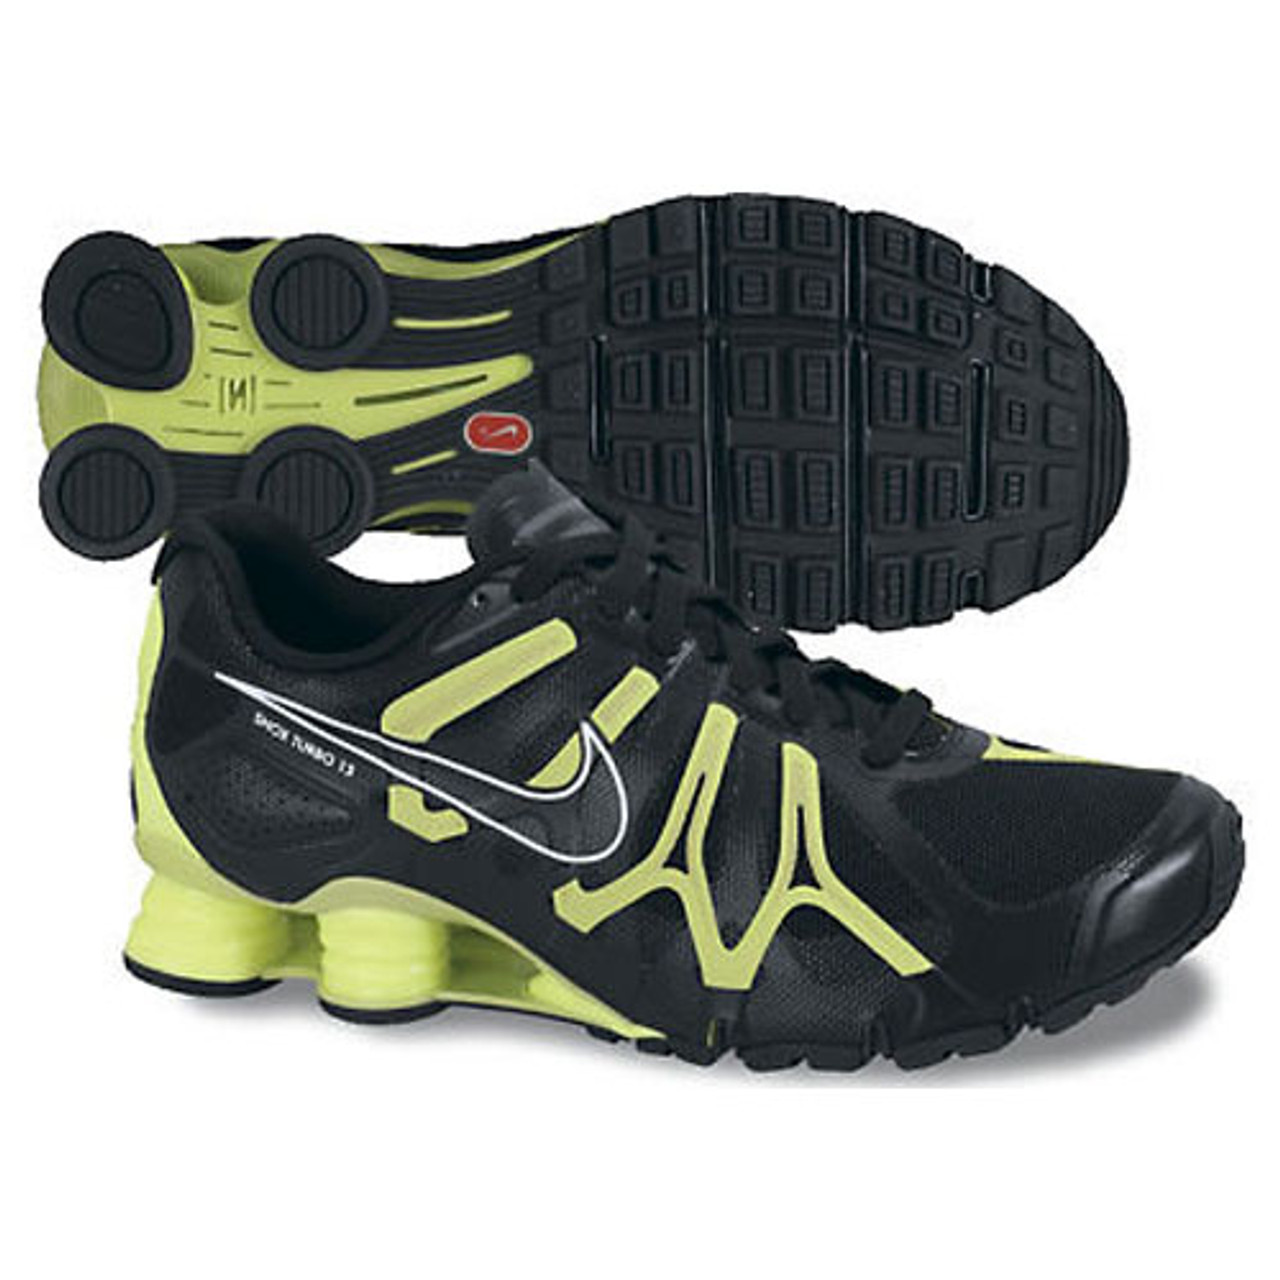 Nike Shox Turbo 13 Black/Volt - | Discount Nike Men's Athletic & More - Shoolu.com Shoolu.com